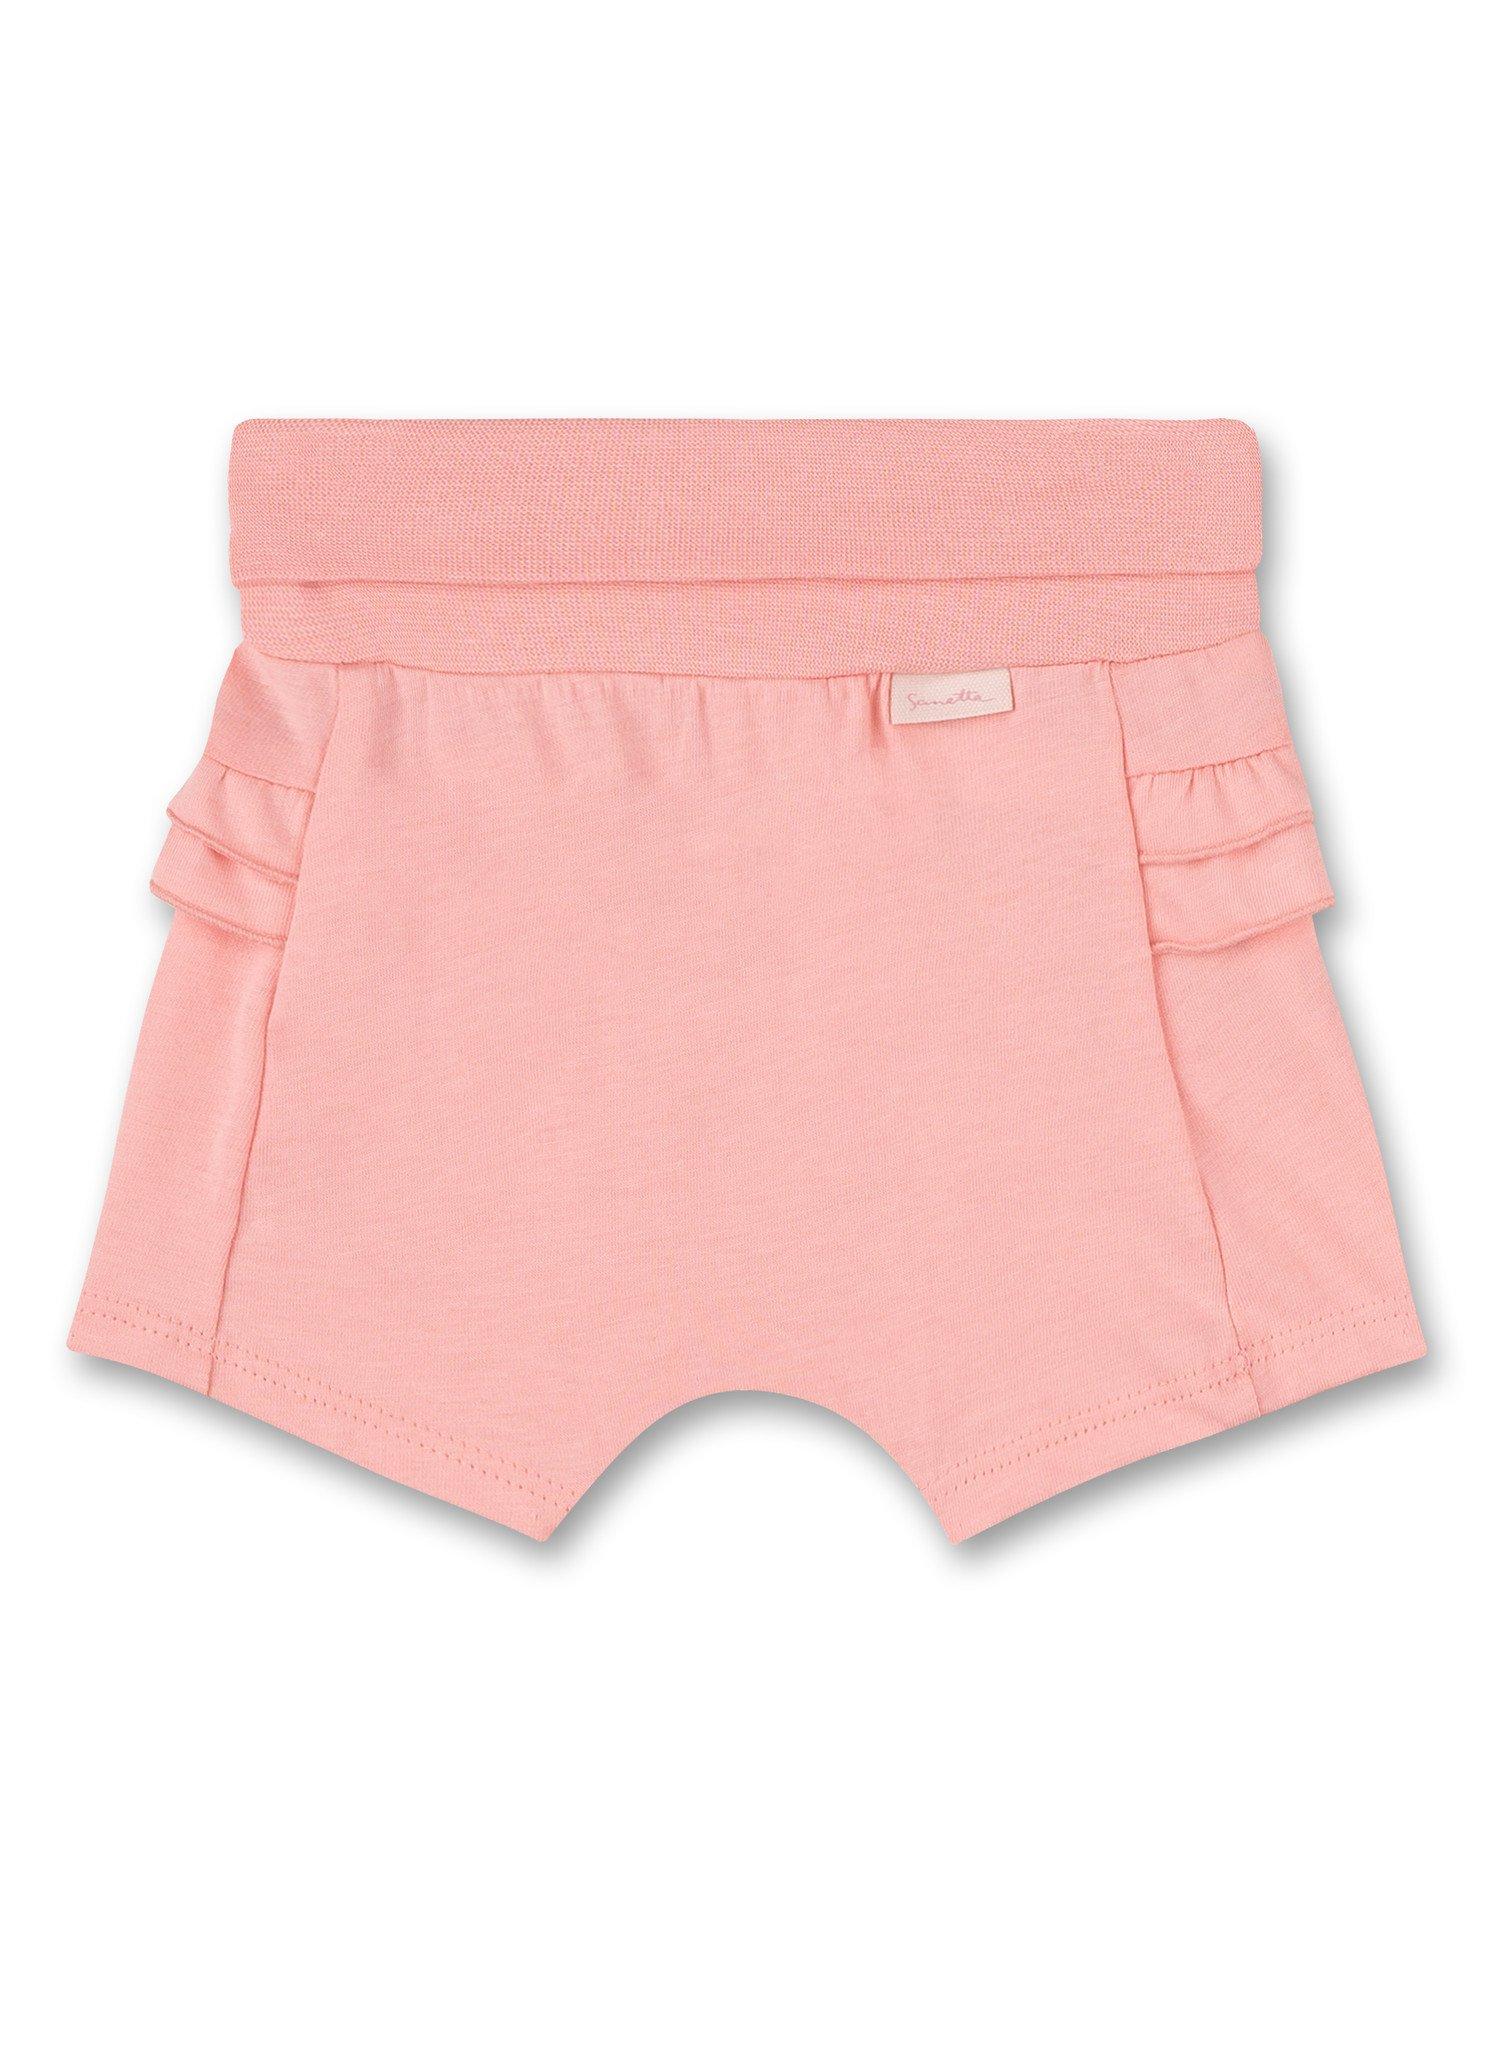 Sanetta Fiftyseven  Baby Mädchen Shorts rosa 